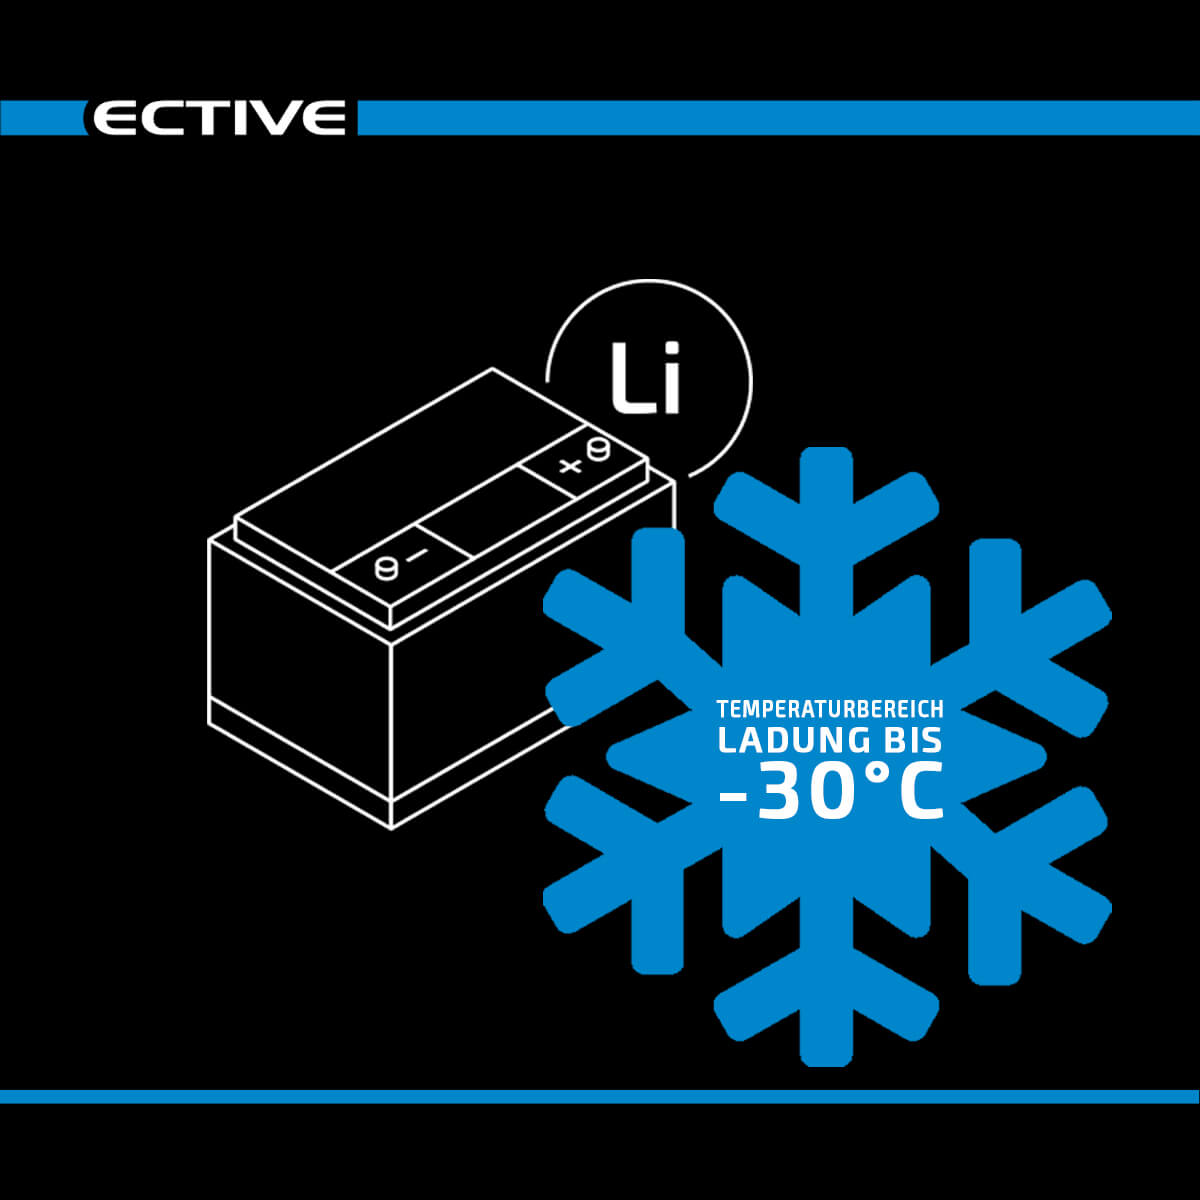 ECTIVE LC 80 LT 12V LiFePO4 Lithium Versorgungsbatterie, 804,77 €